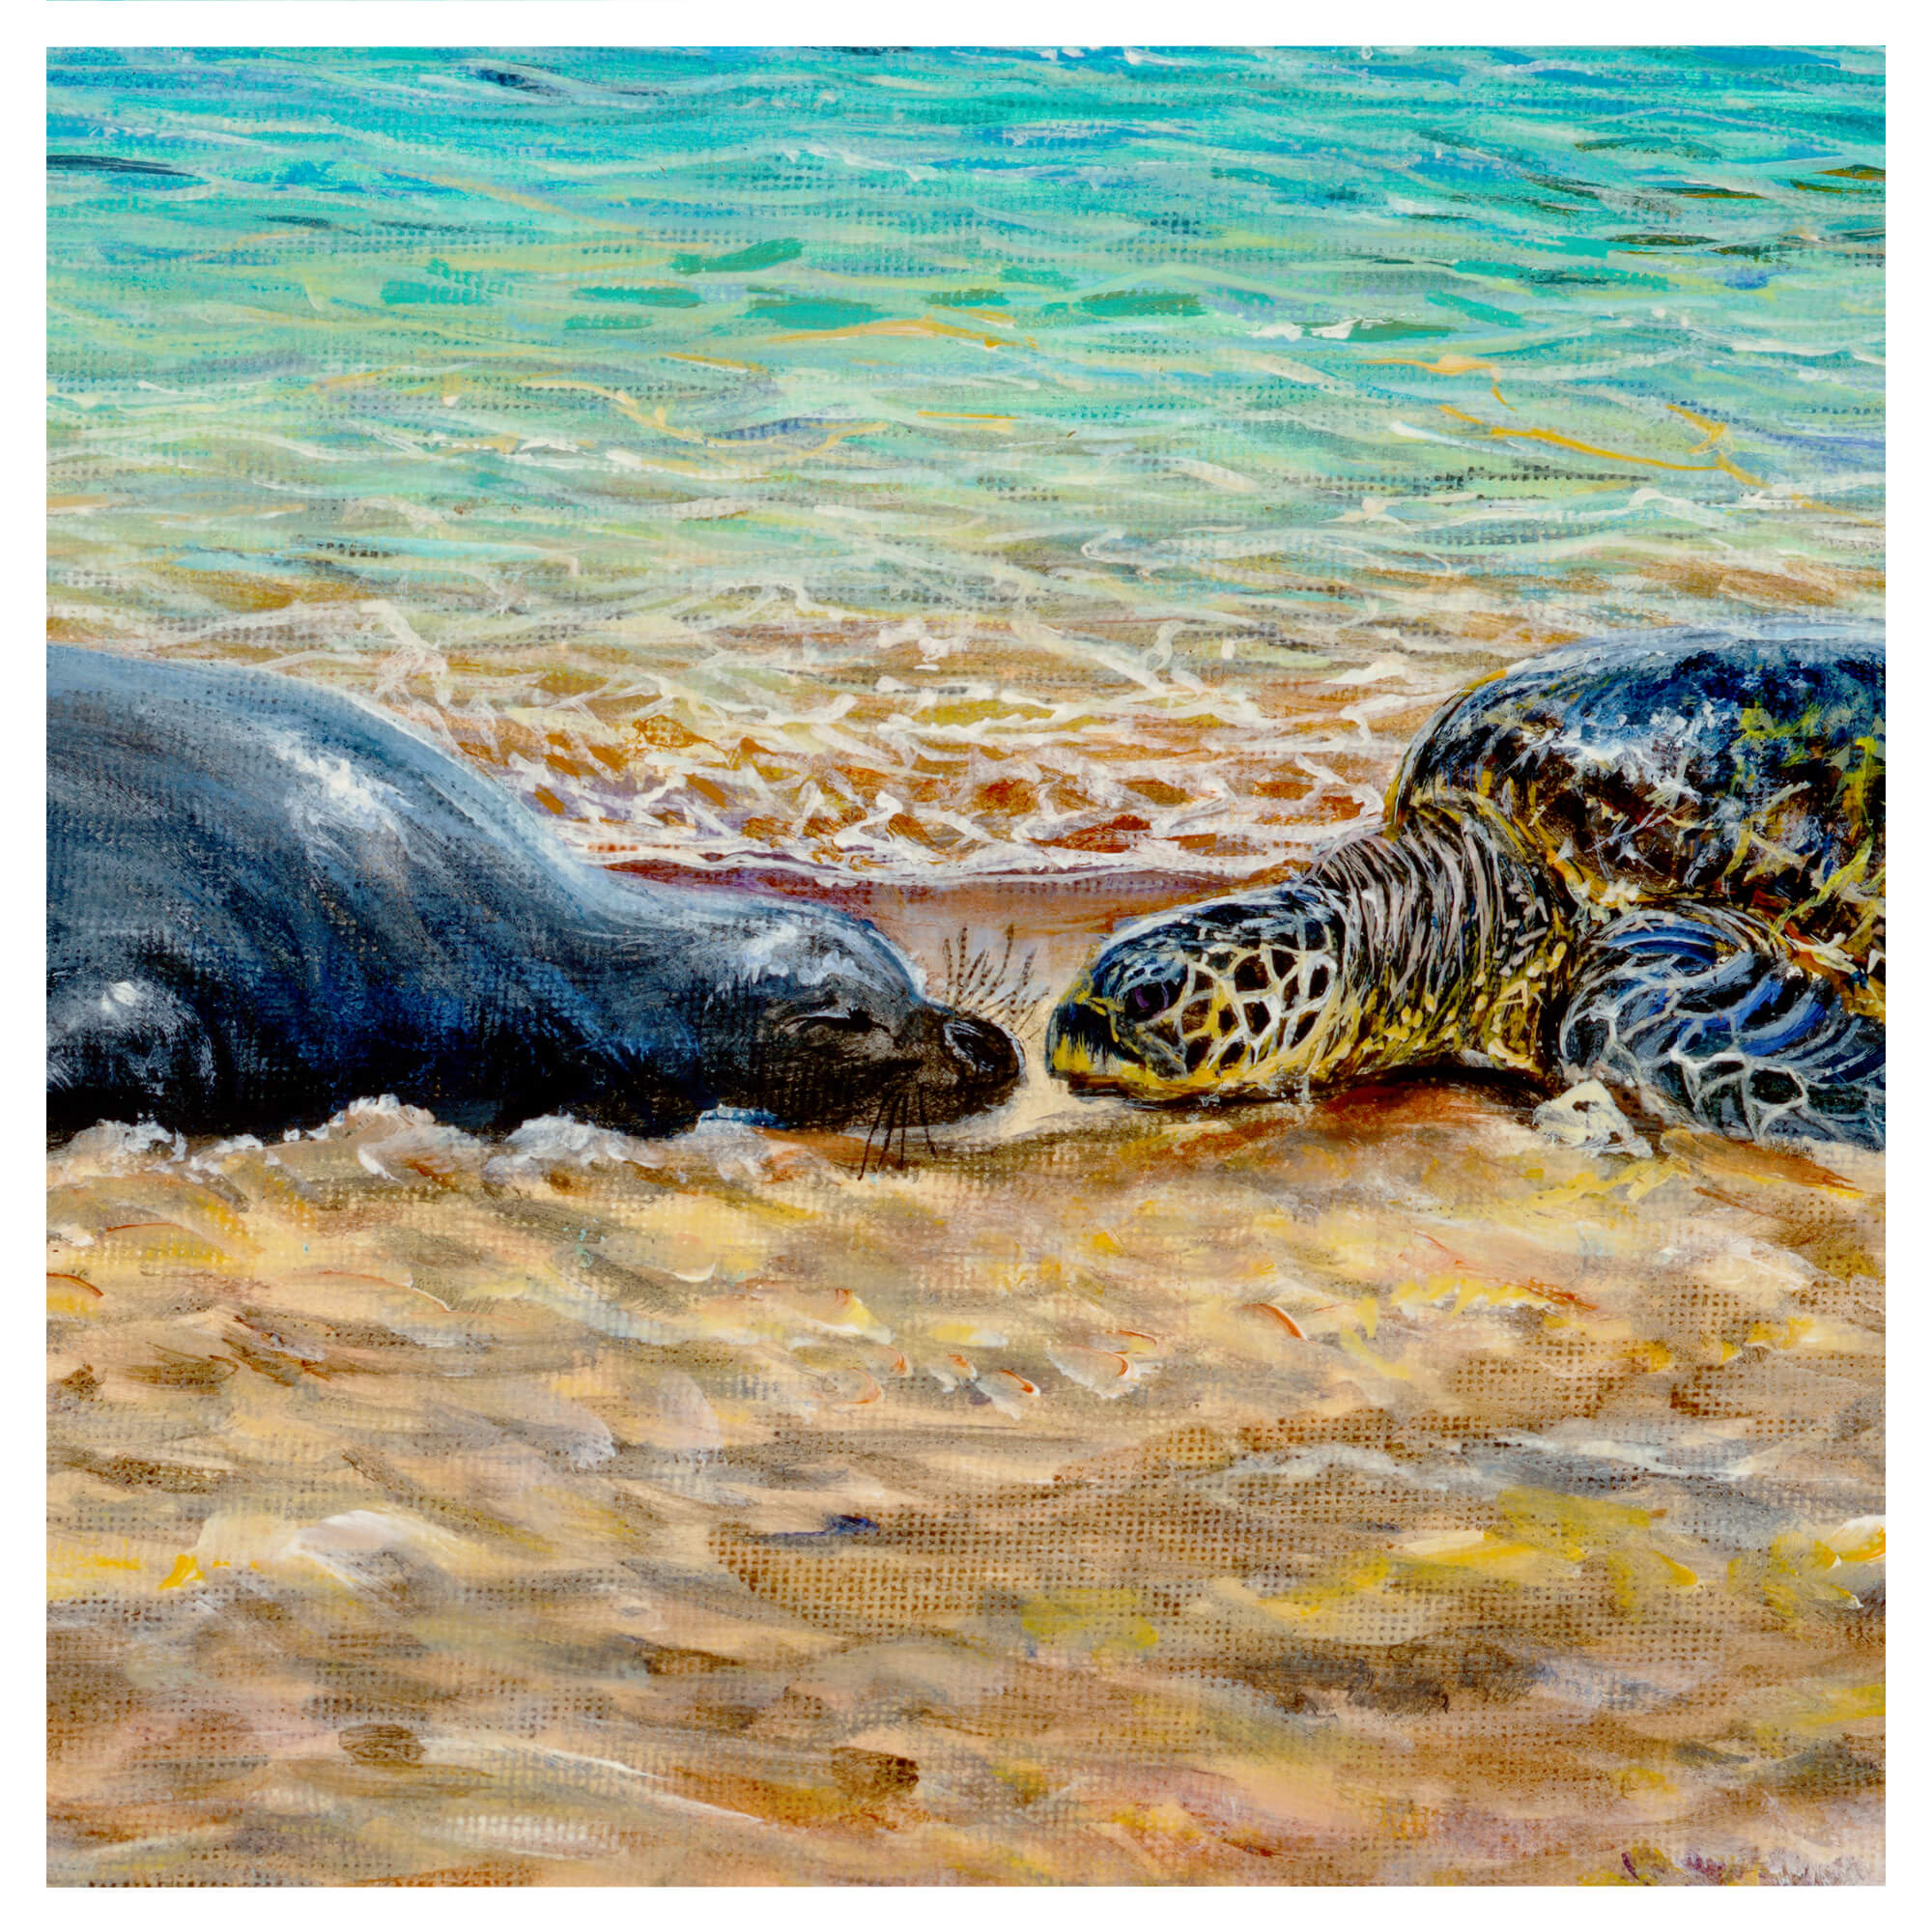 An illustration showcasing a seal and a turtle by hawaii artist Esperance Rakotonirinaii 